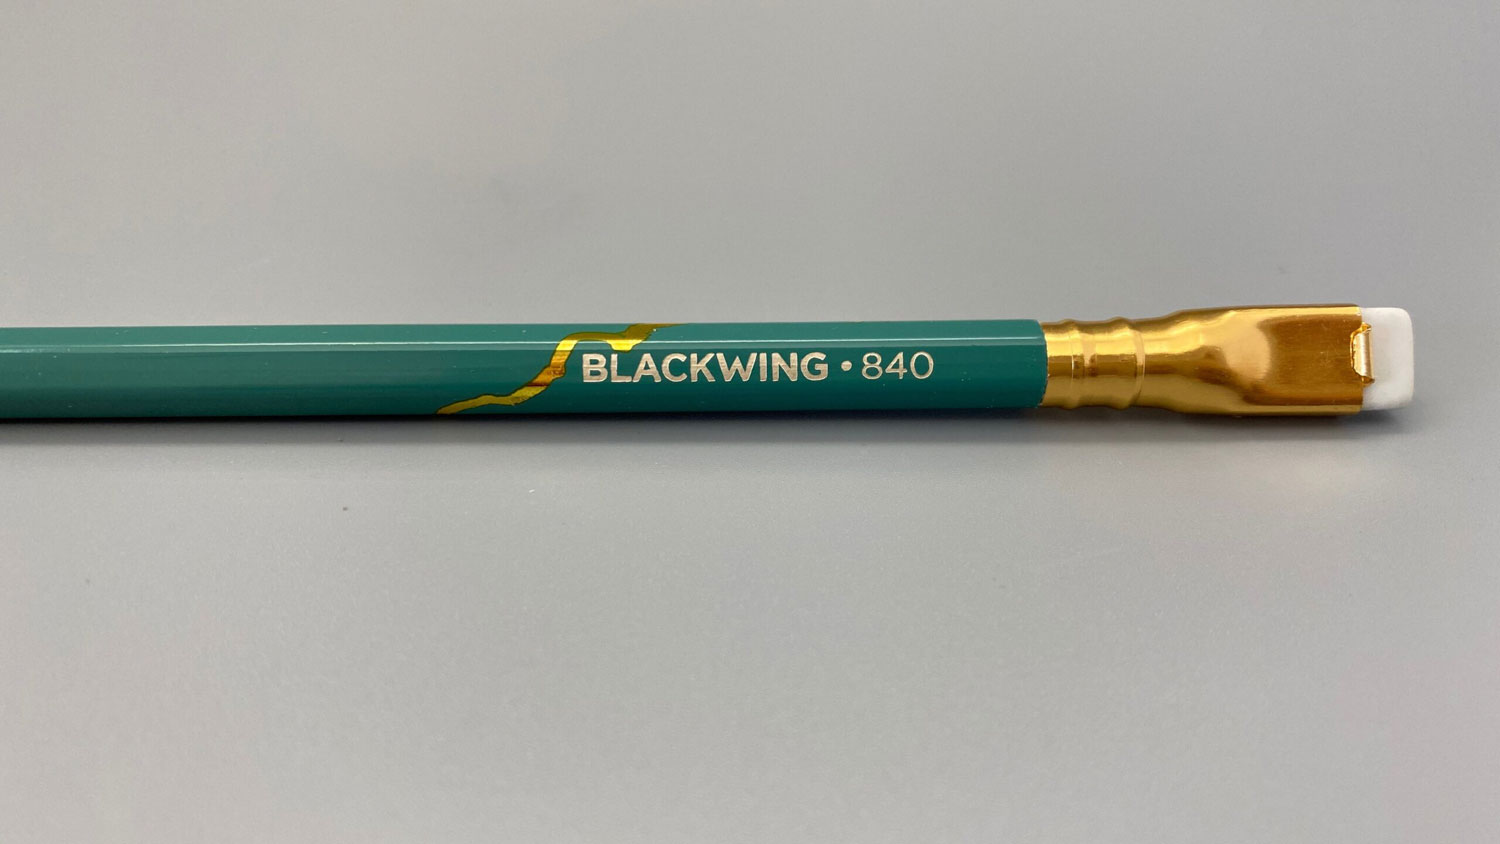 blackwing volume 840